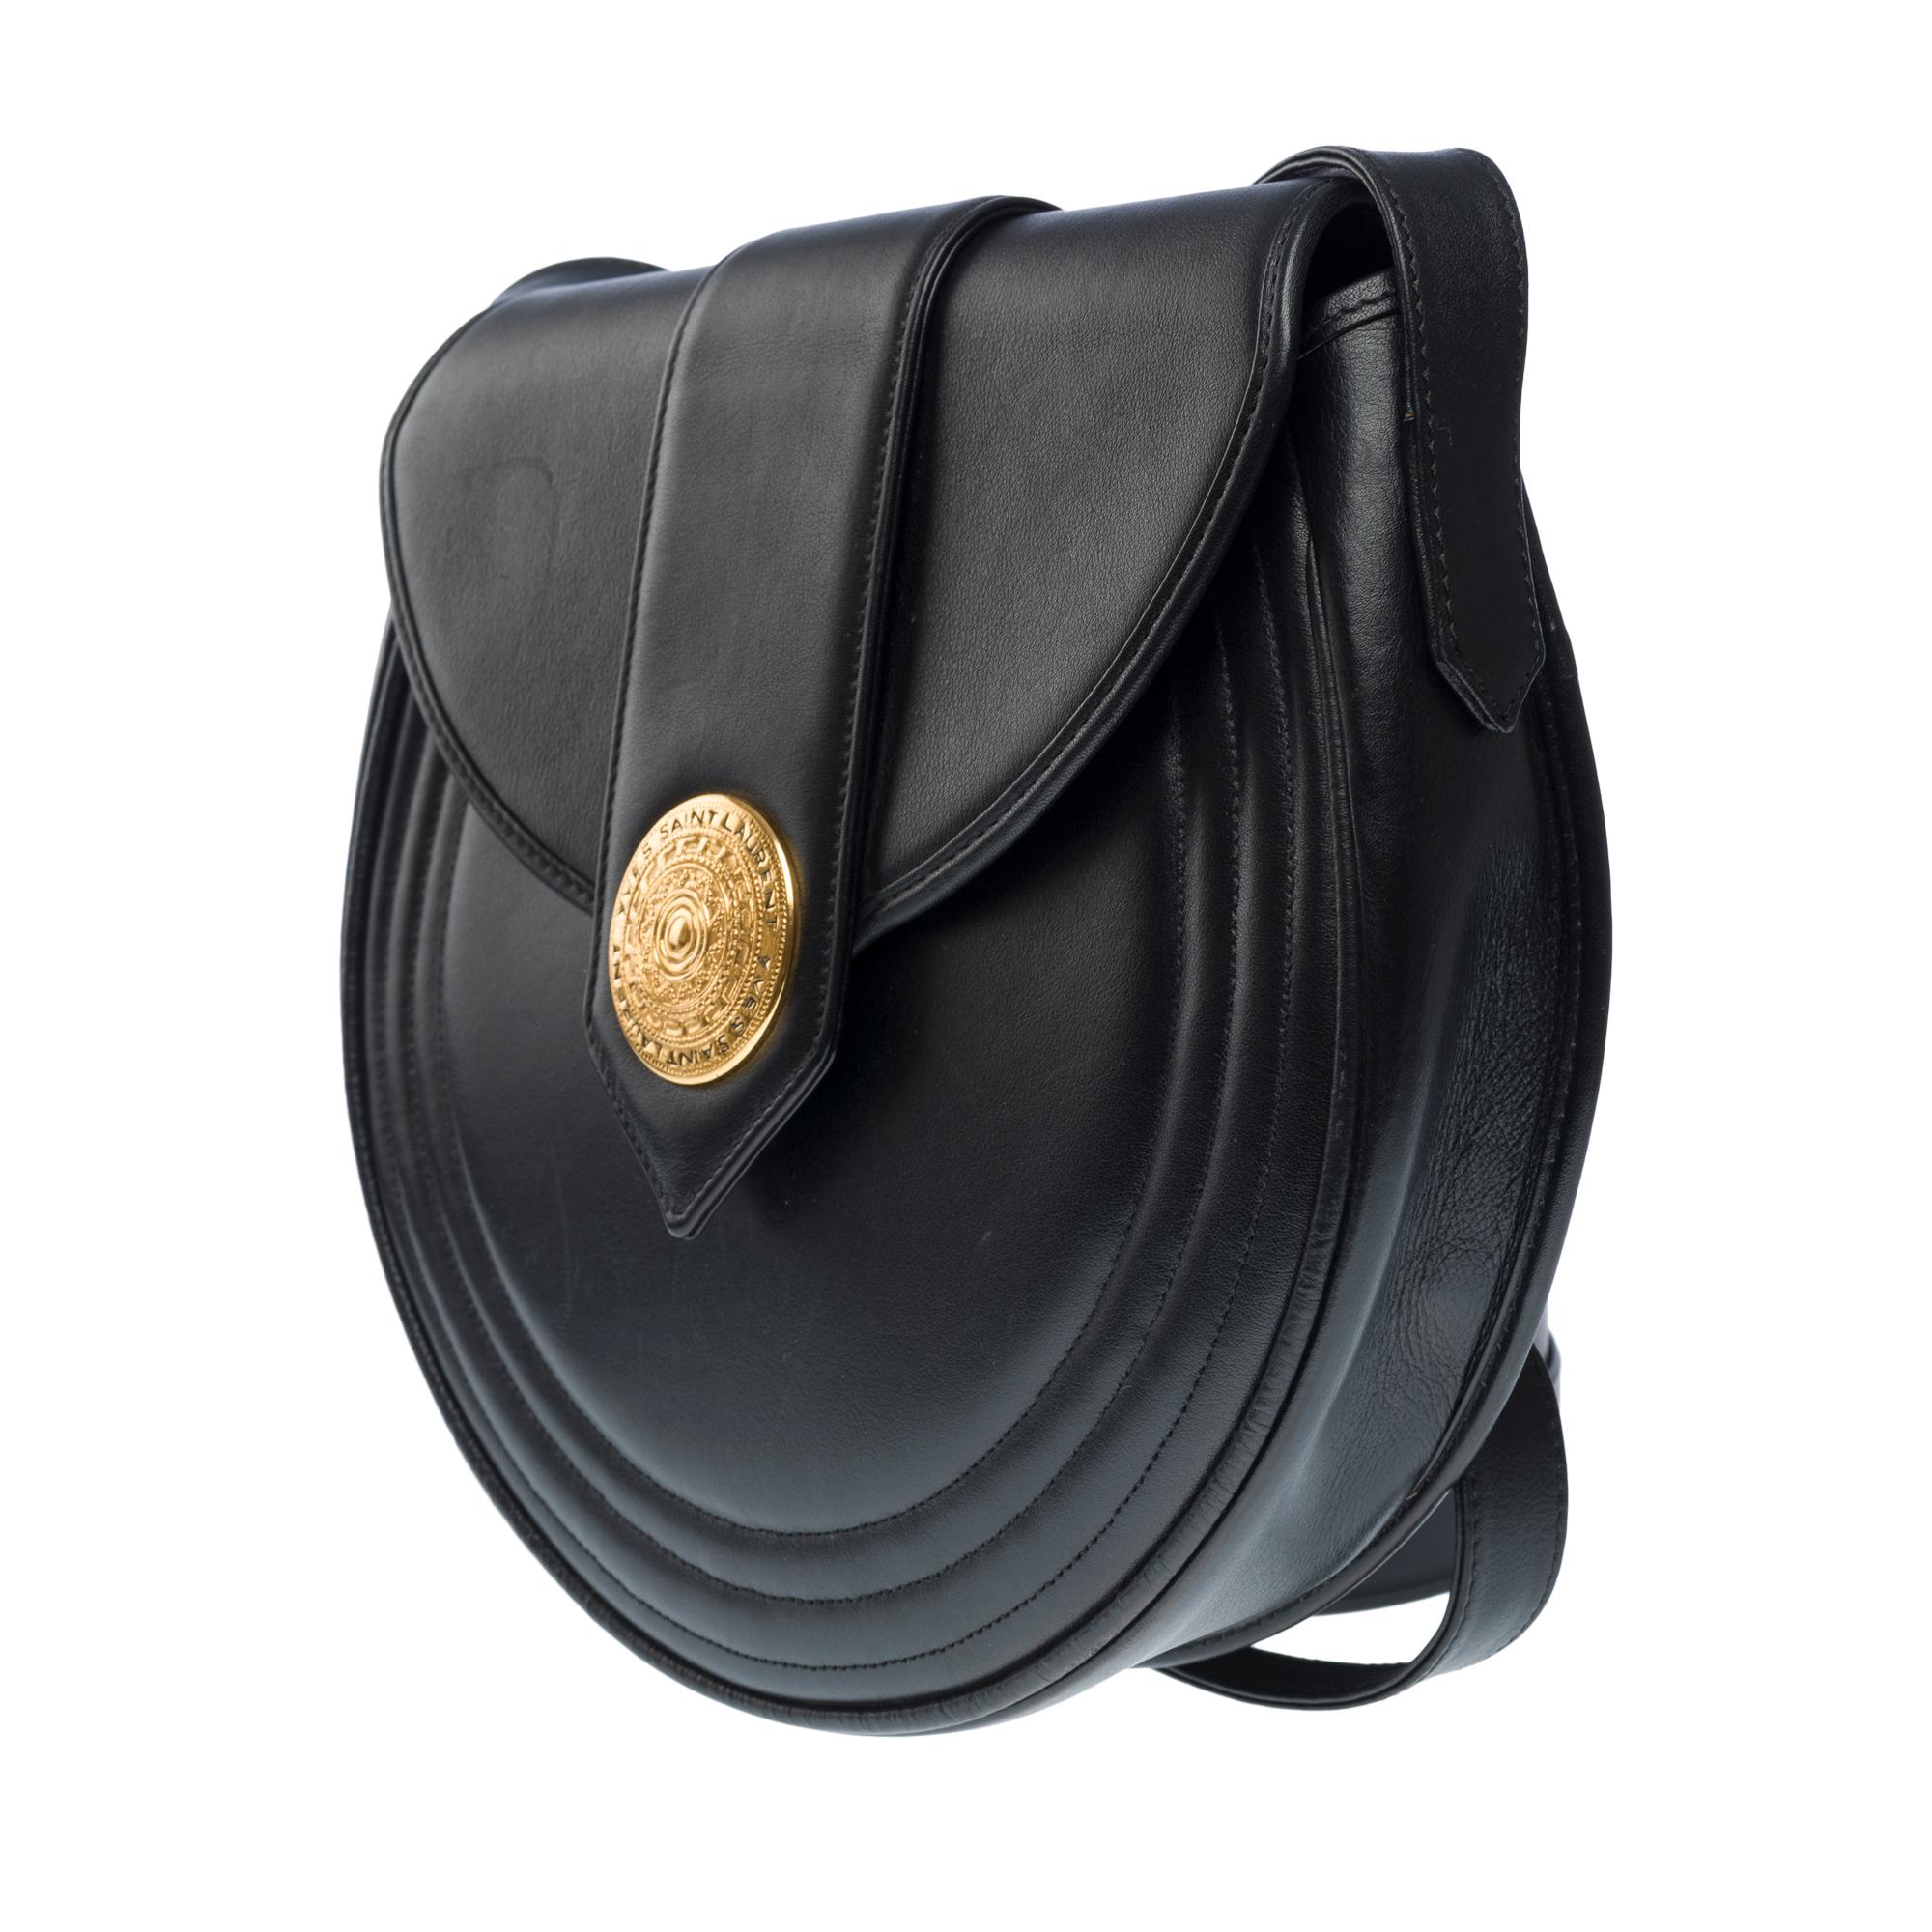 Lovely YSL shoulder bag in the shape of a half moon in black leather, GHW 1